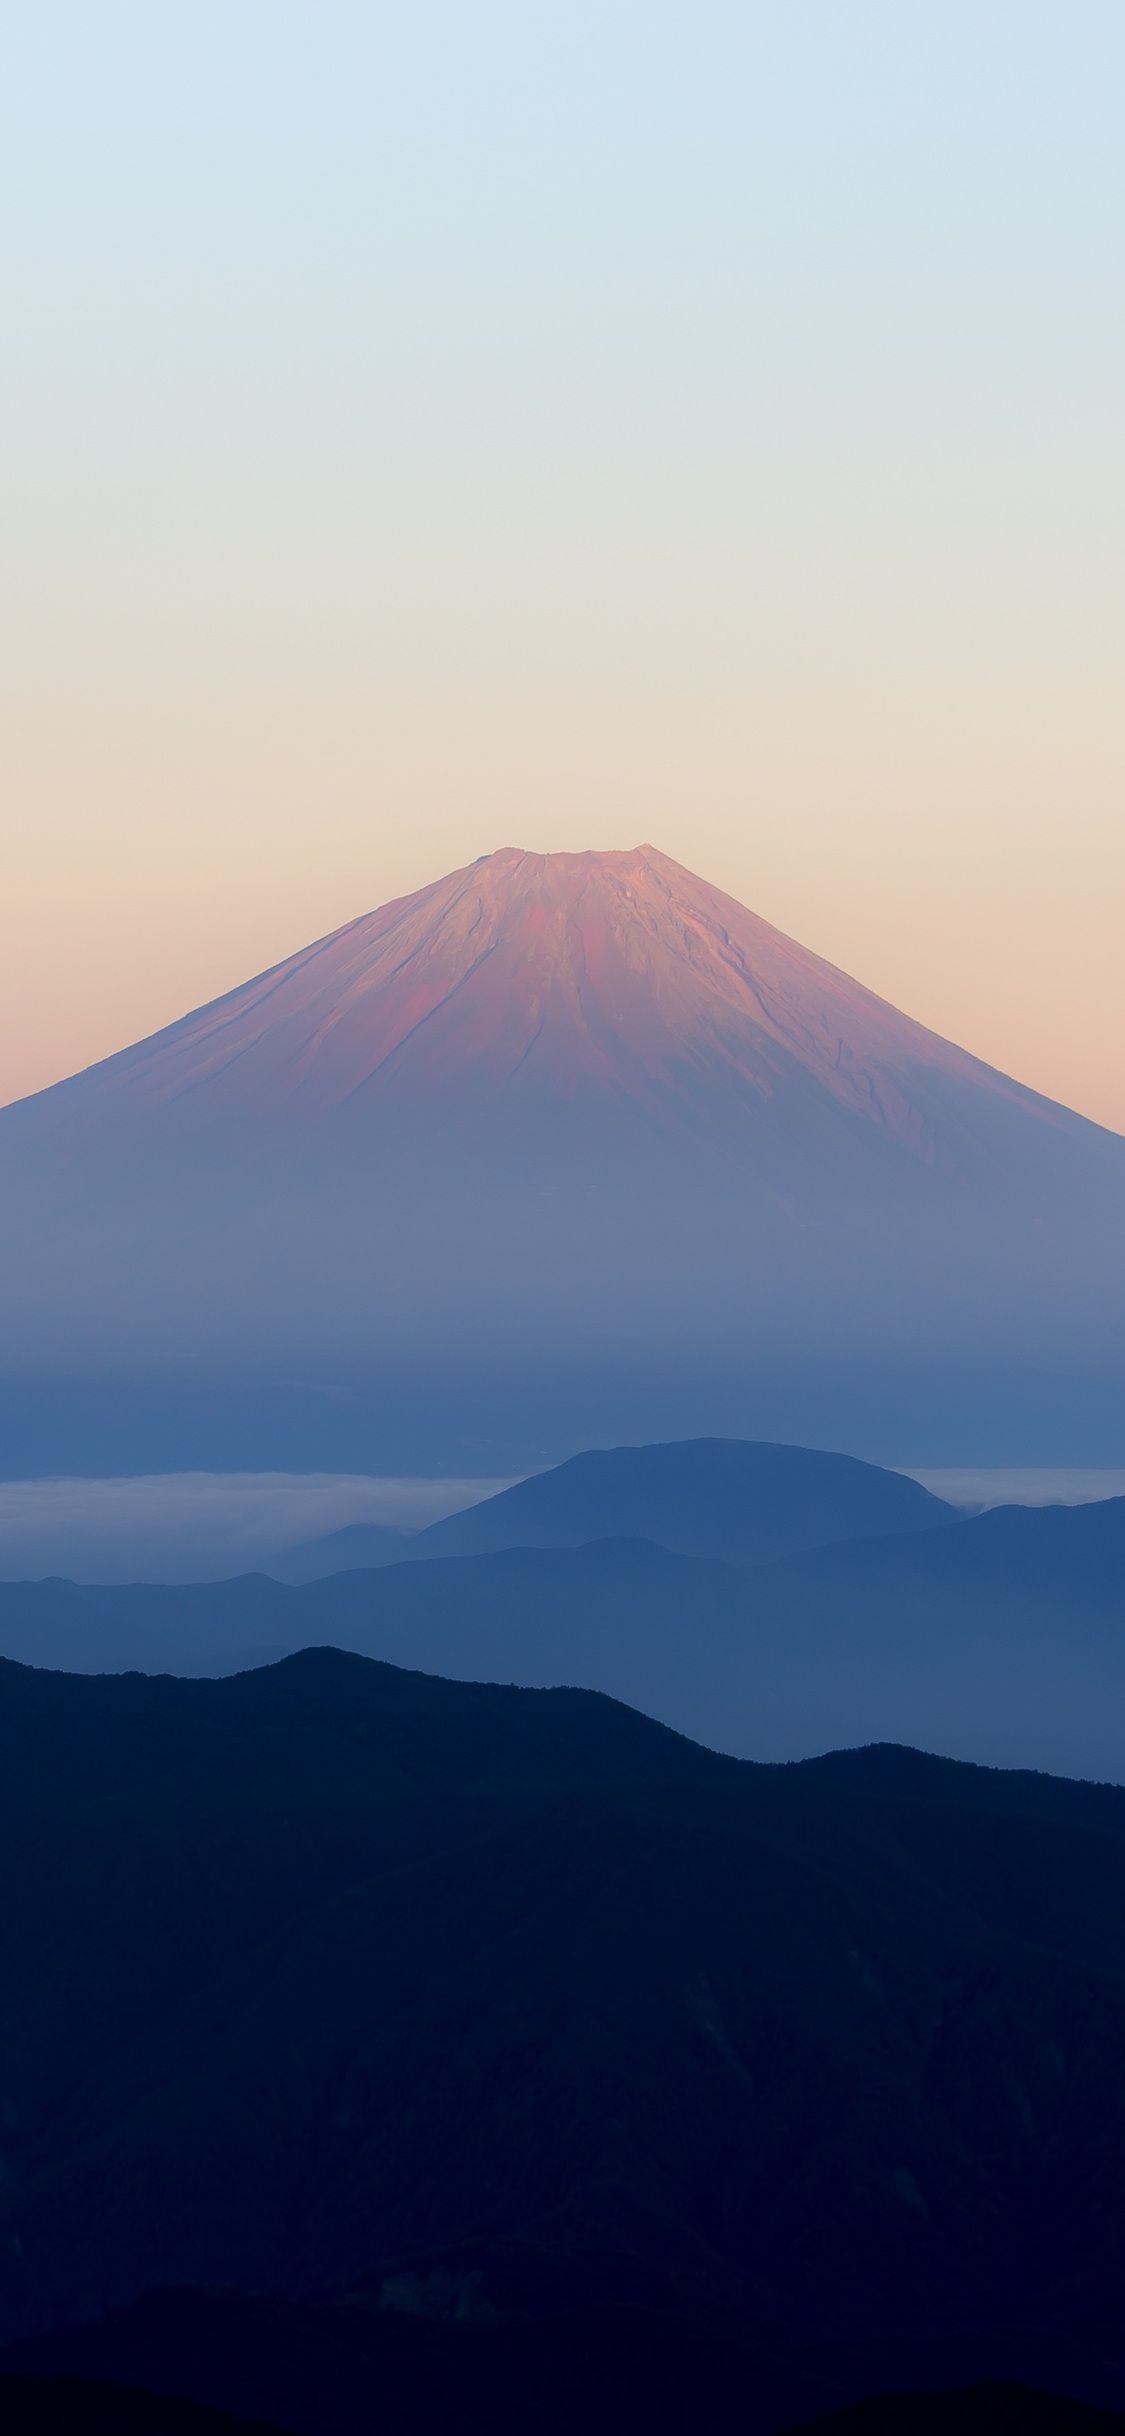 750+ Mt Fuji Pictures | Download Free Images on Unsplash